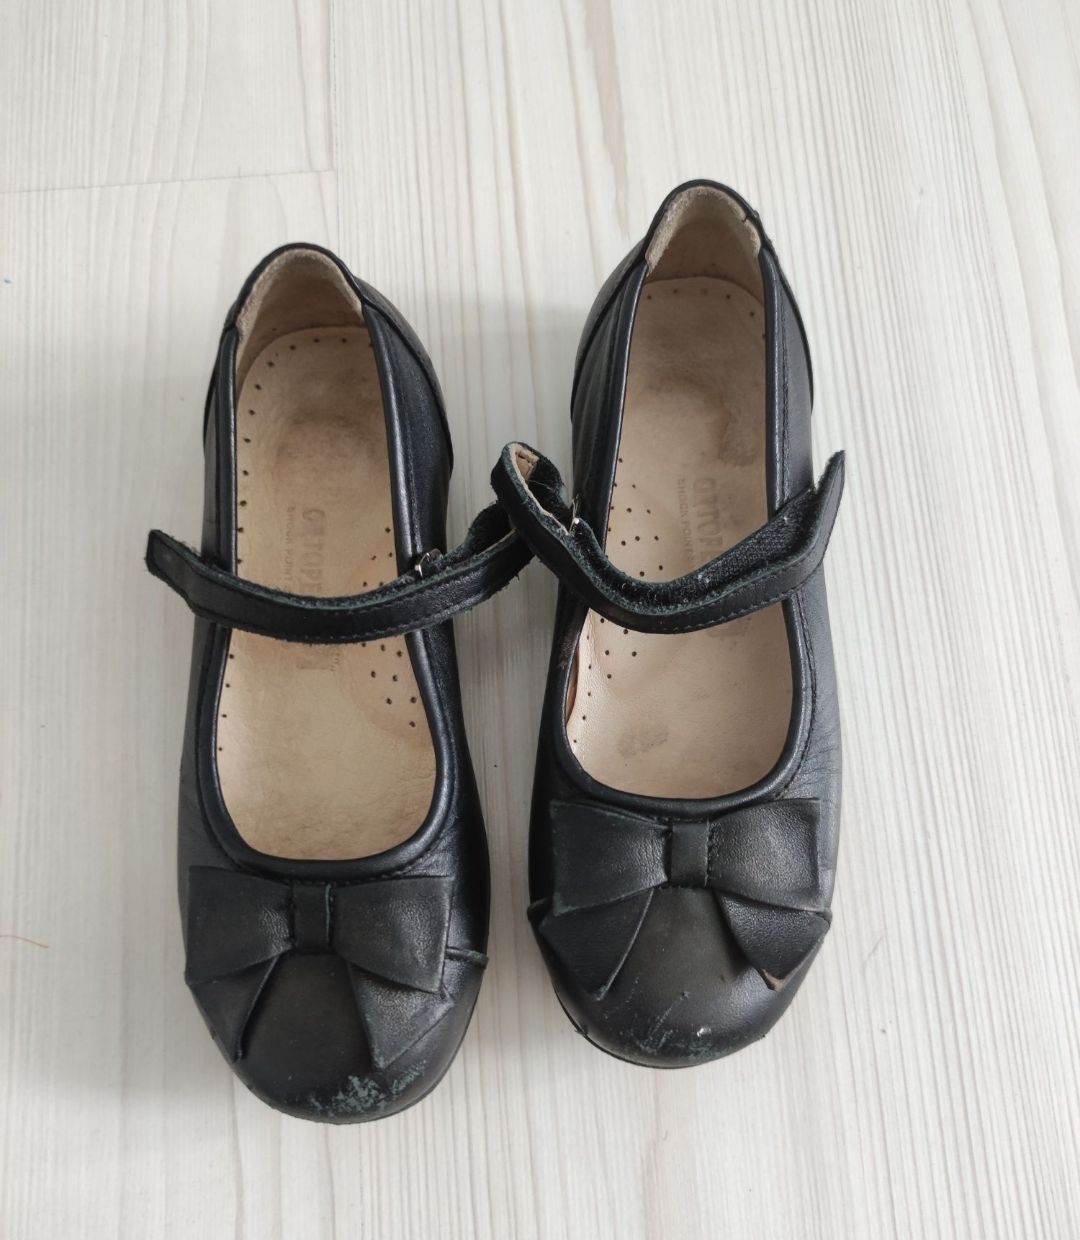 Ortopedia pantofi piele neagra fetite masura 30